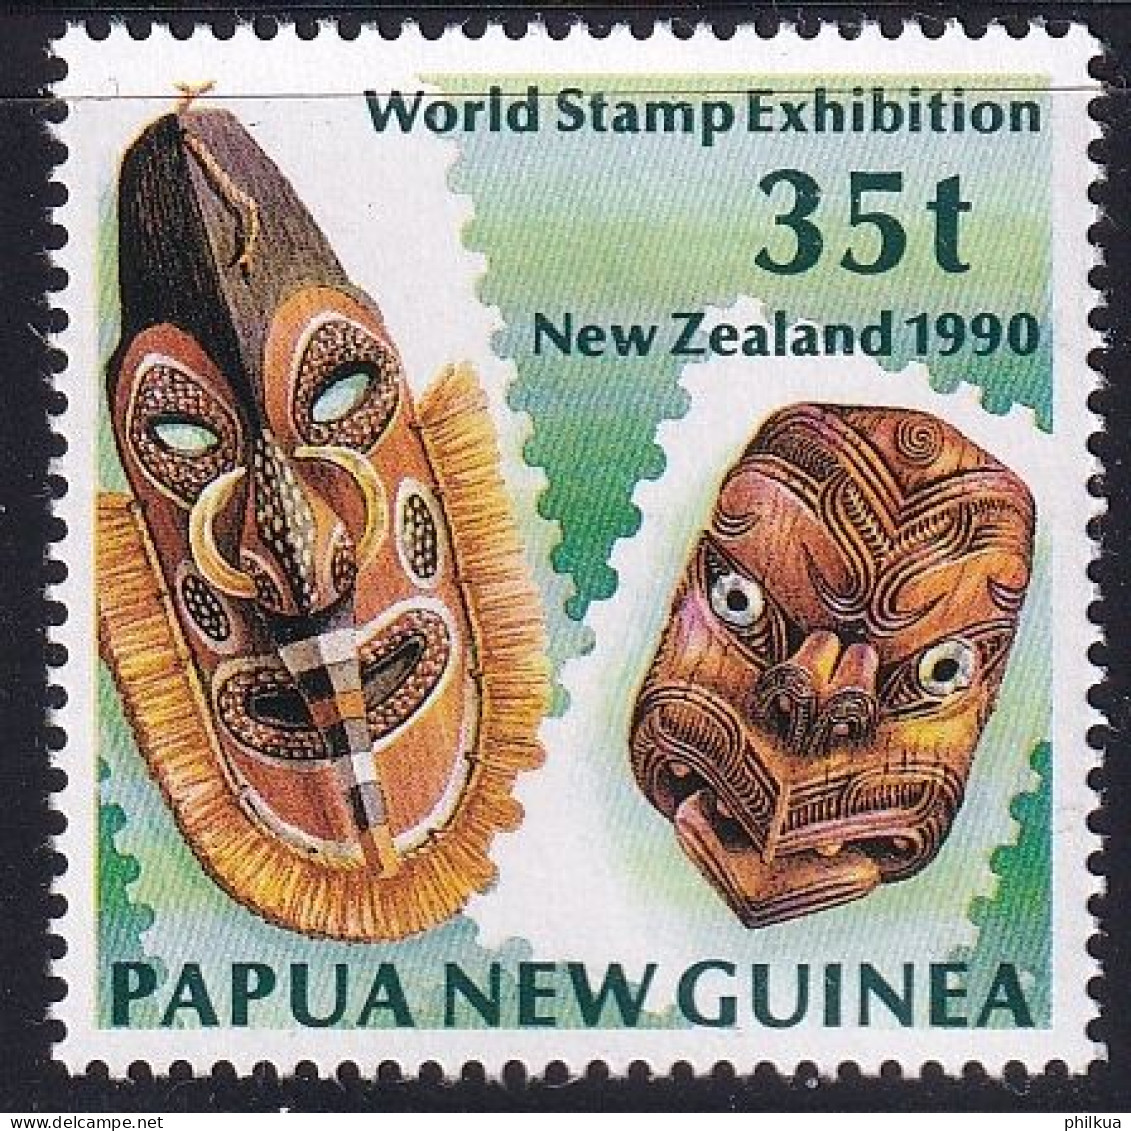 MiNr. 622 Papua-Neuguinea 1990, 24. Aug. Internationale Briefmarkenausstellung NEW ZEALAND ’90, Auc- Postfrisch/**/MNH - Papua New Guinea